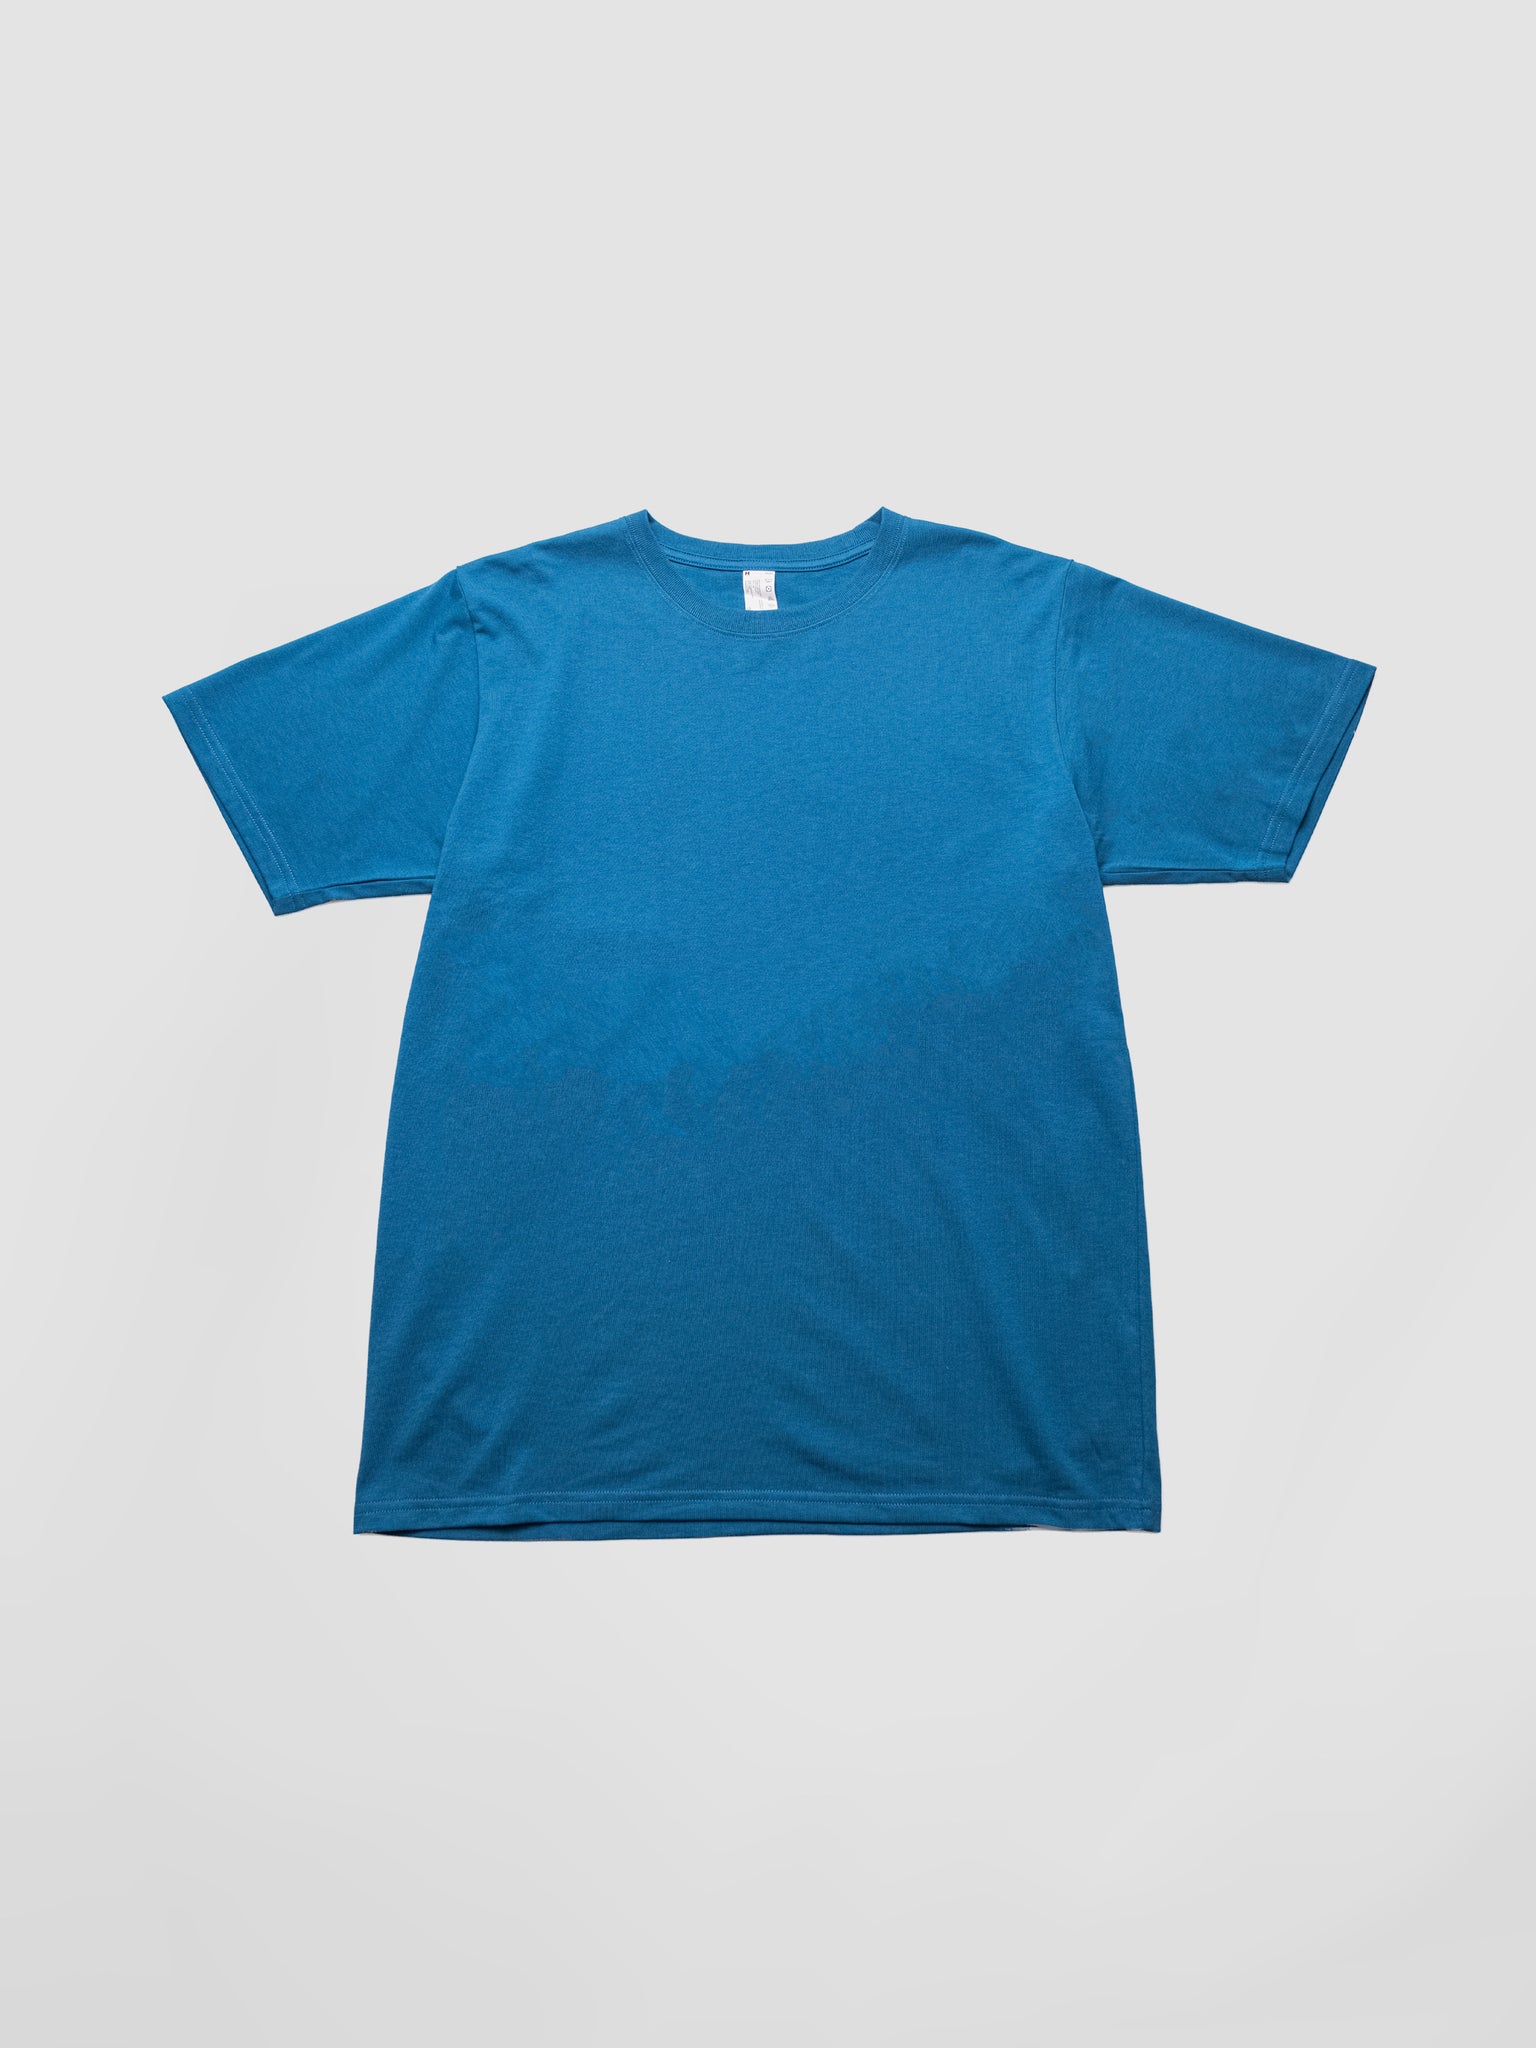 BLANK - Standard Fit T-Shirt Lyons Blue - v2